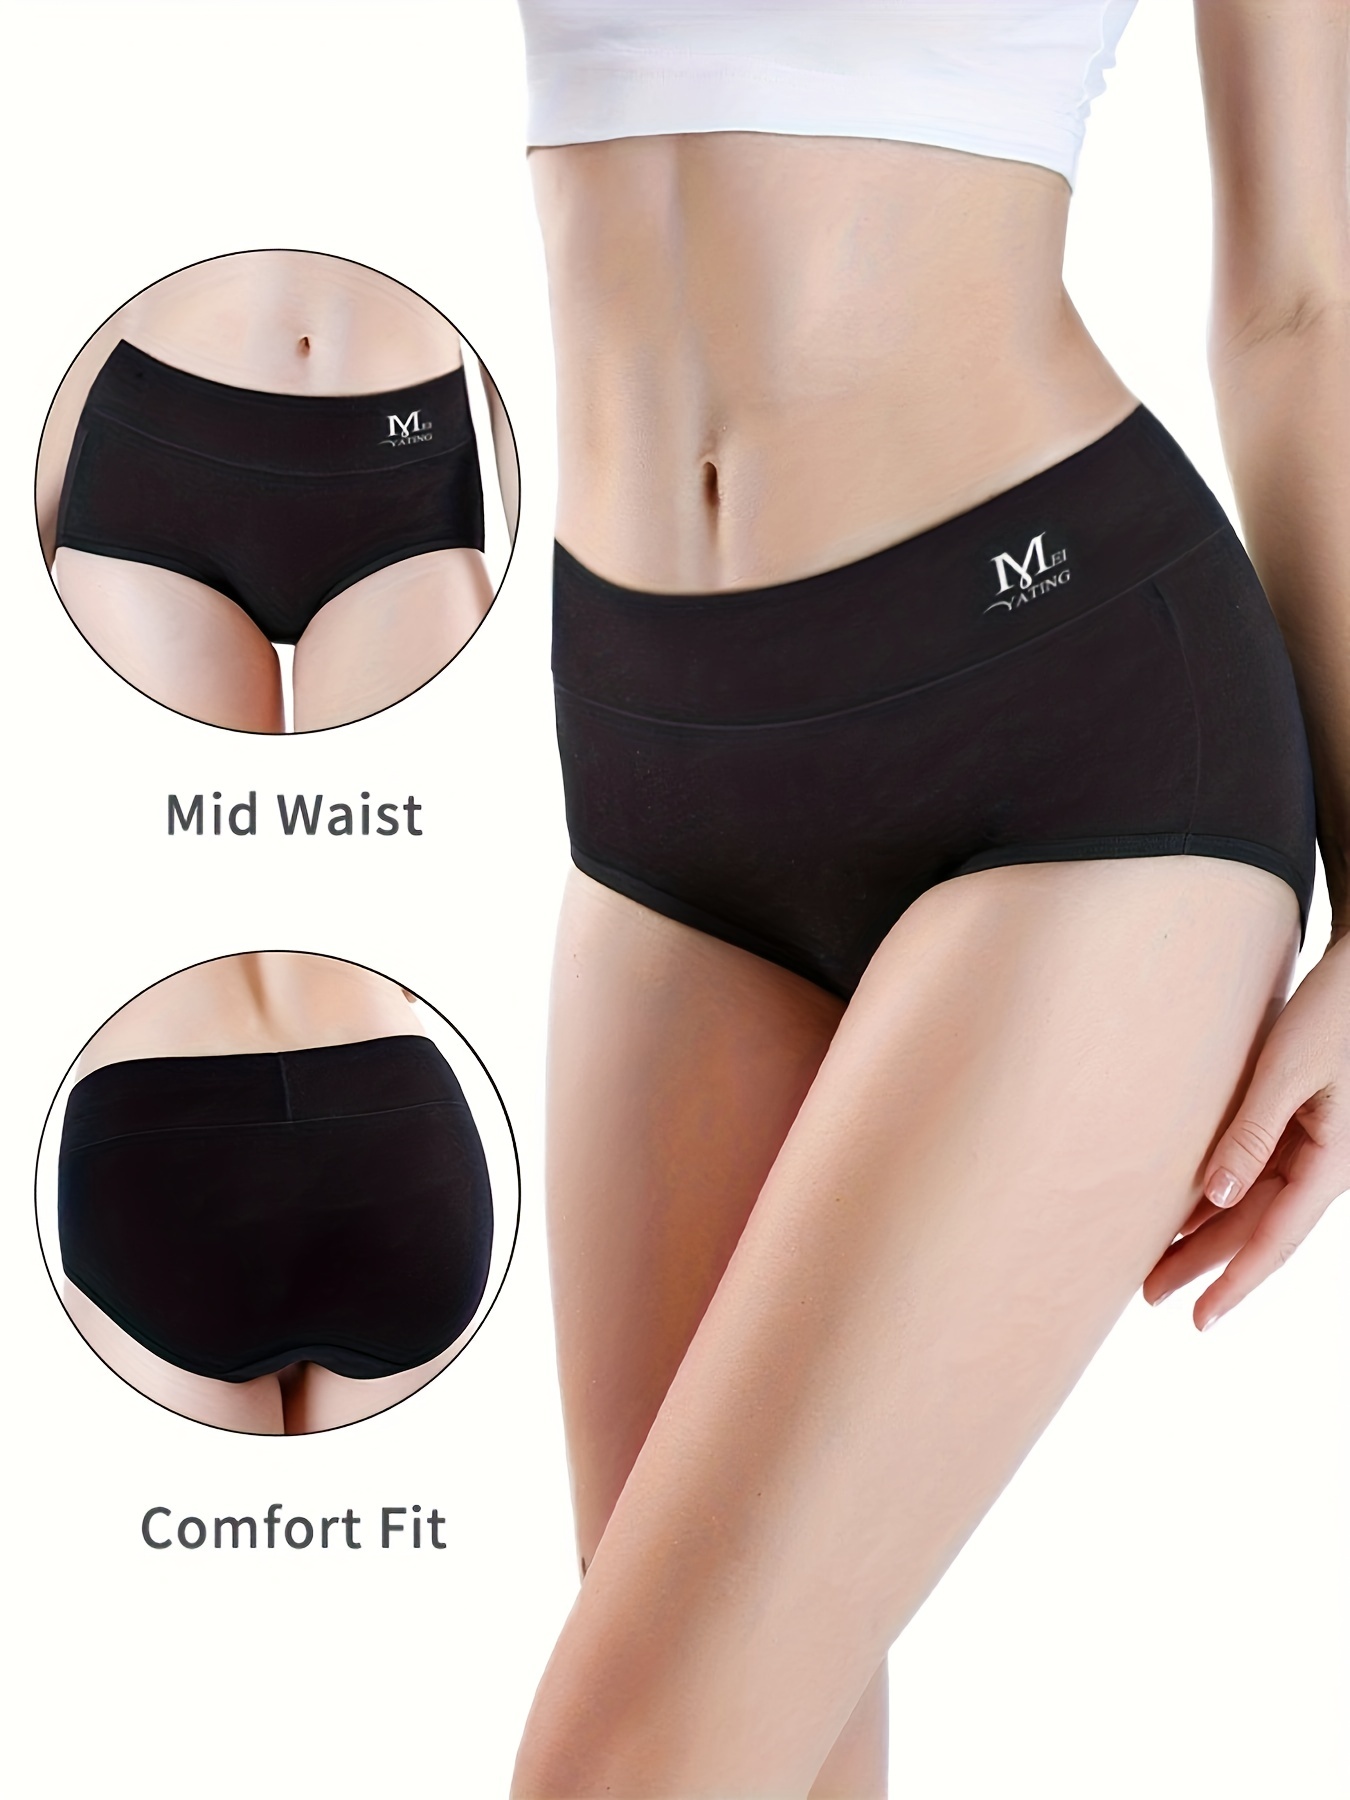 4pcs High Waisted Underwear For Women Soft Breathable Cotton Panties  Stretch Ladies Briefs, Women's Underwear & Lingerie